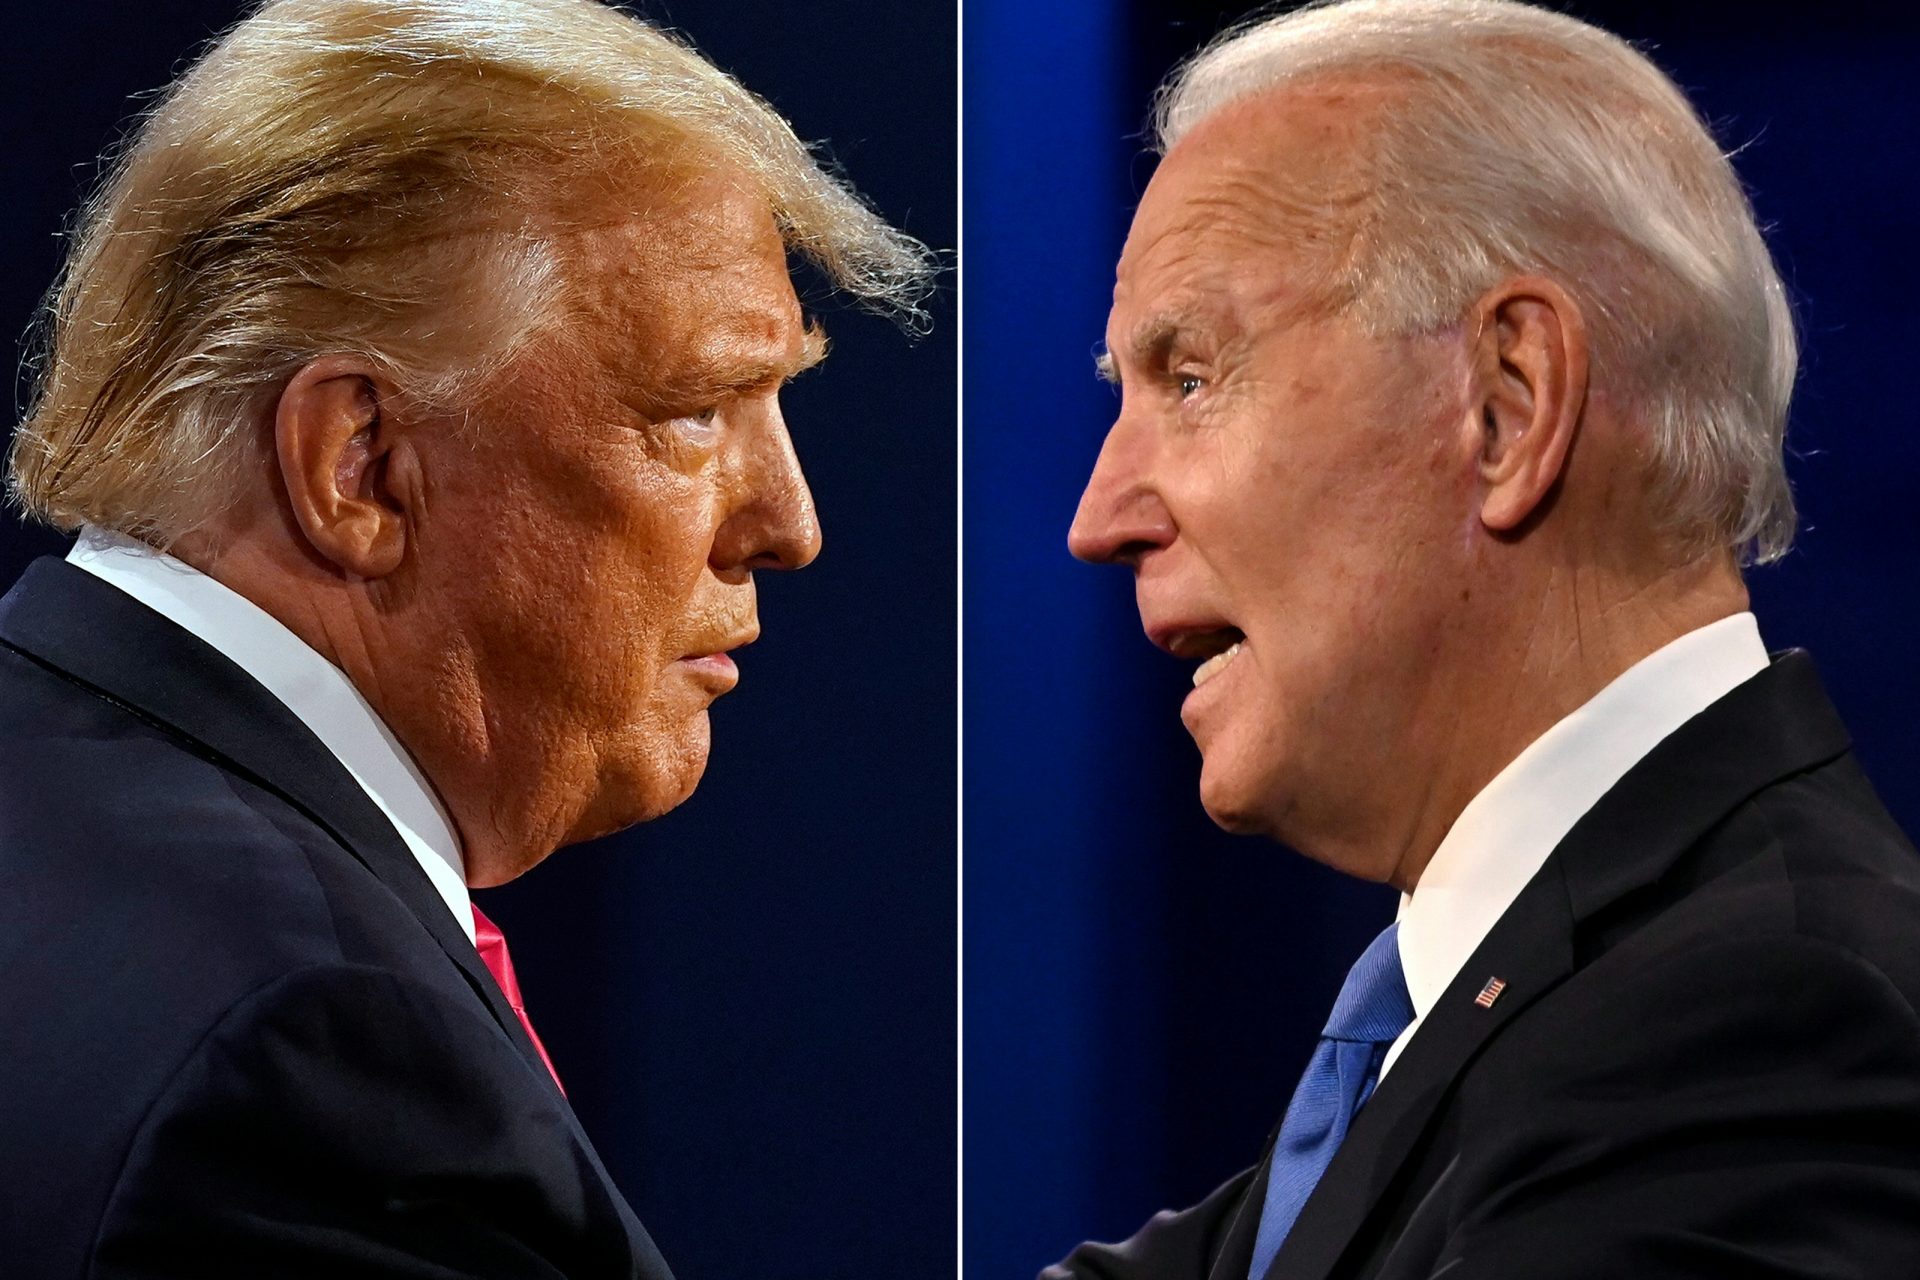 Calls for Biden to step down post-debate 